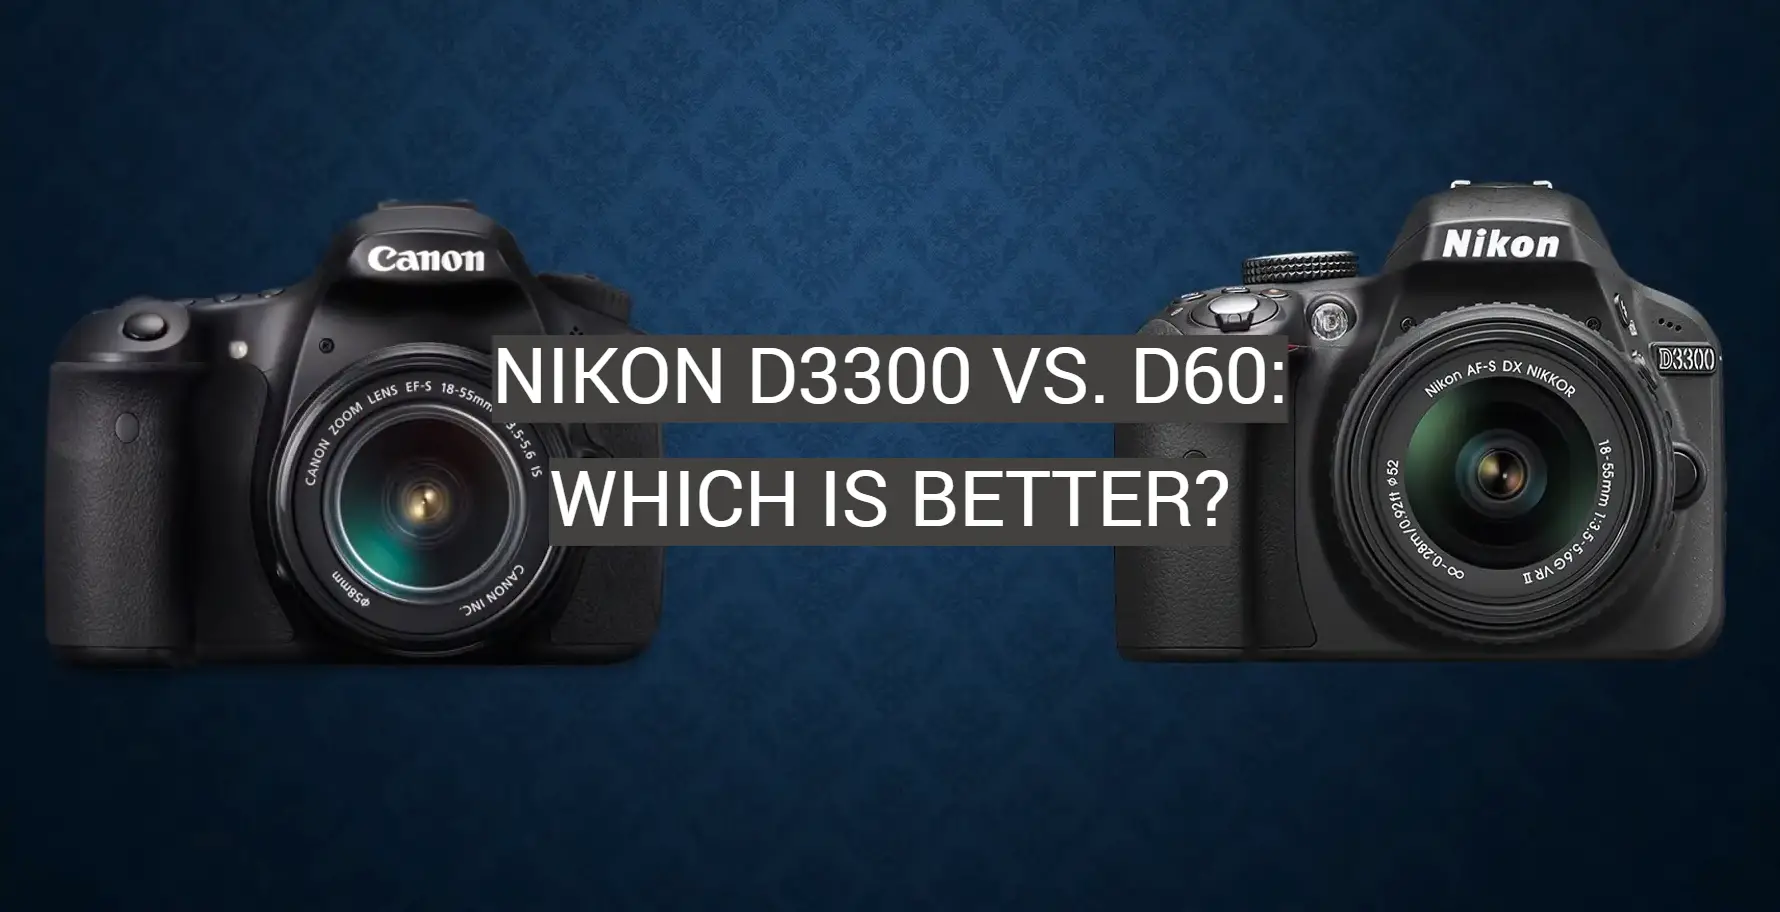 Nikon D3300 vs. D60: Which is Better?